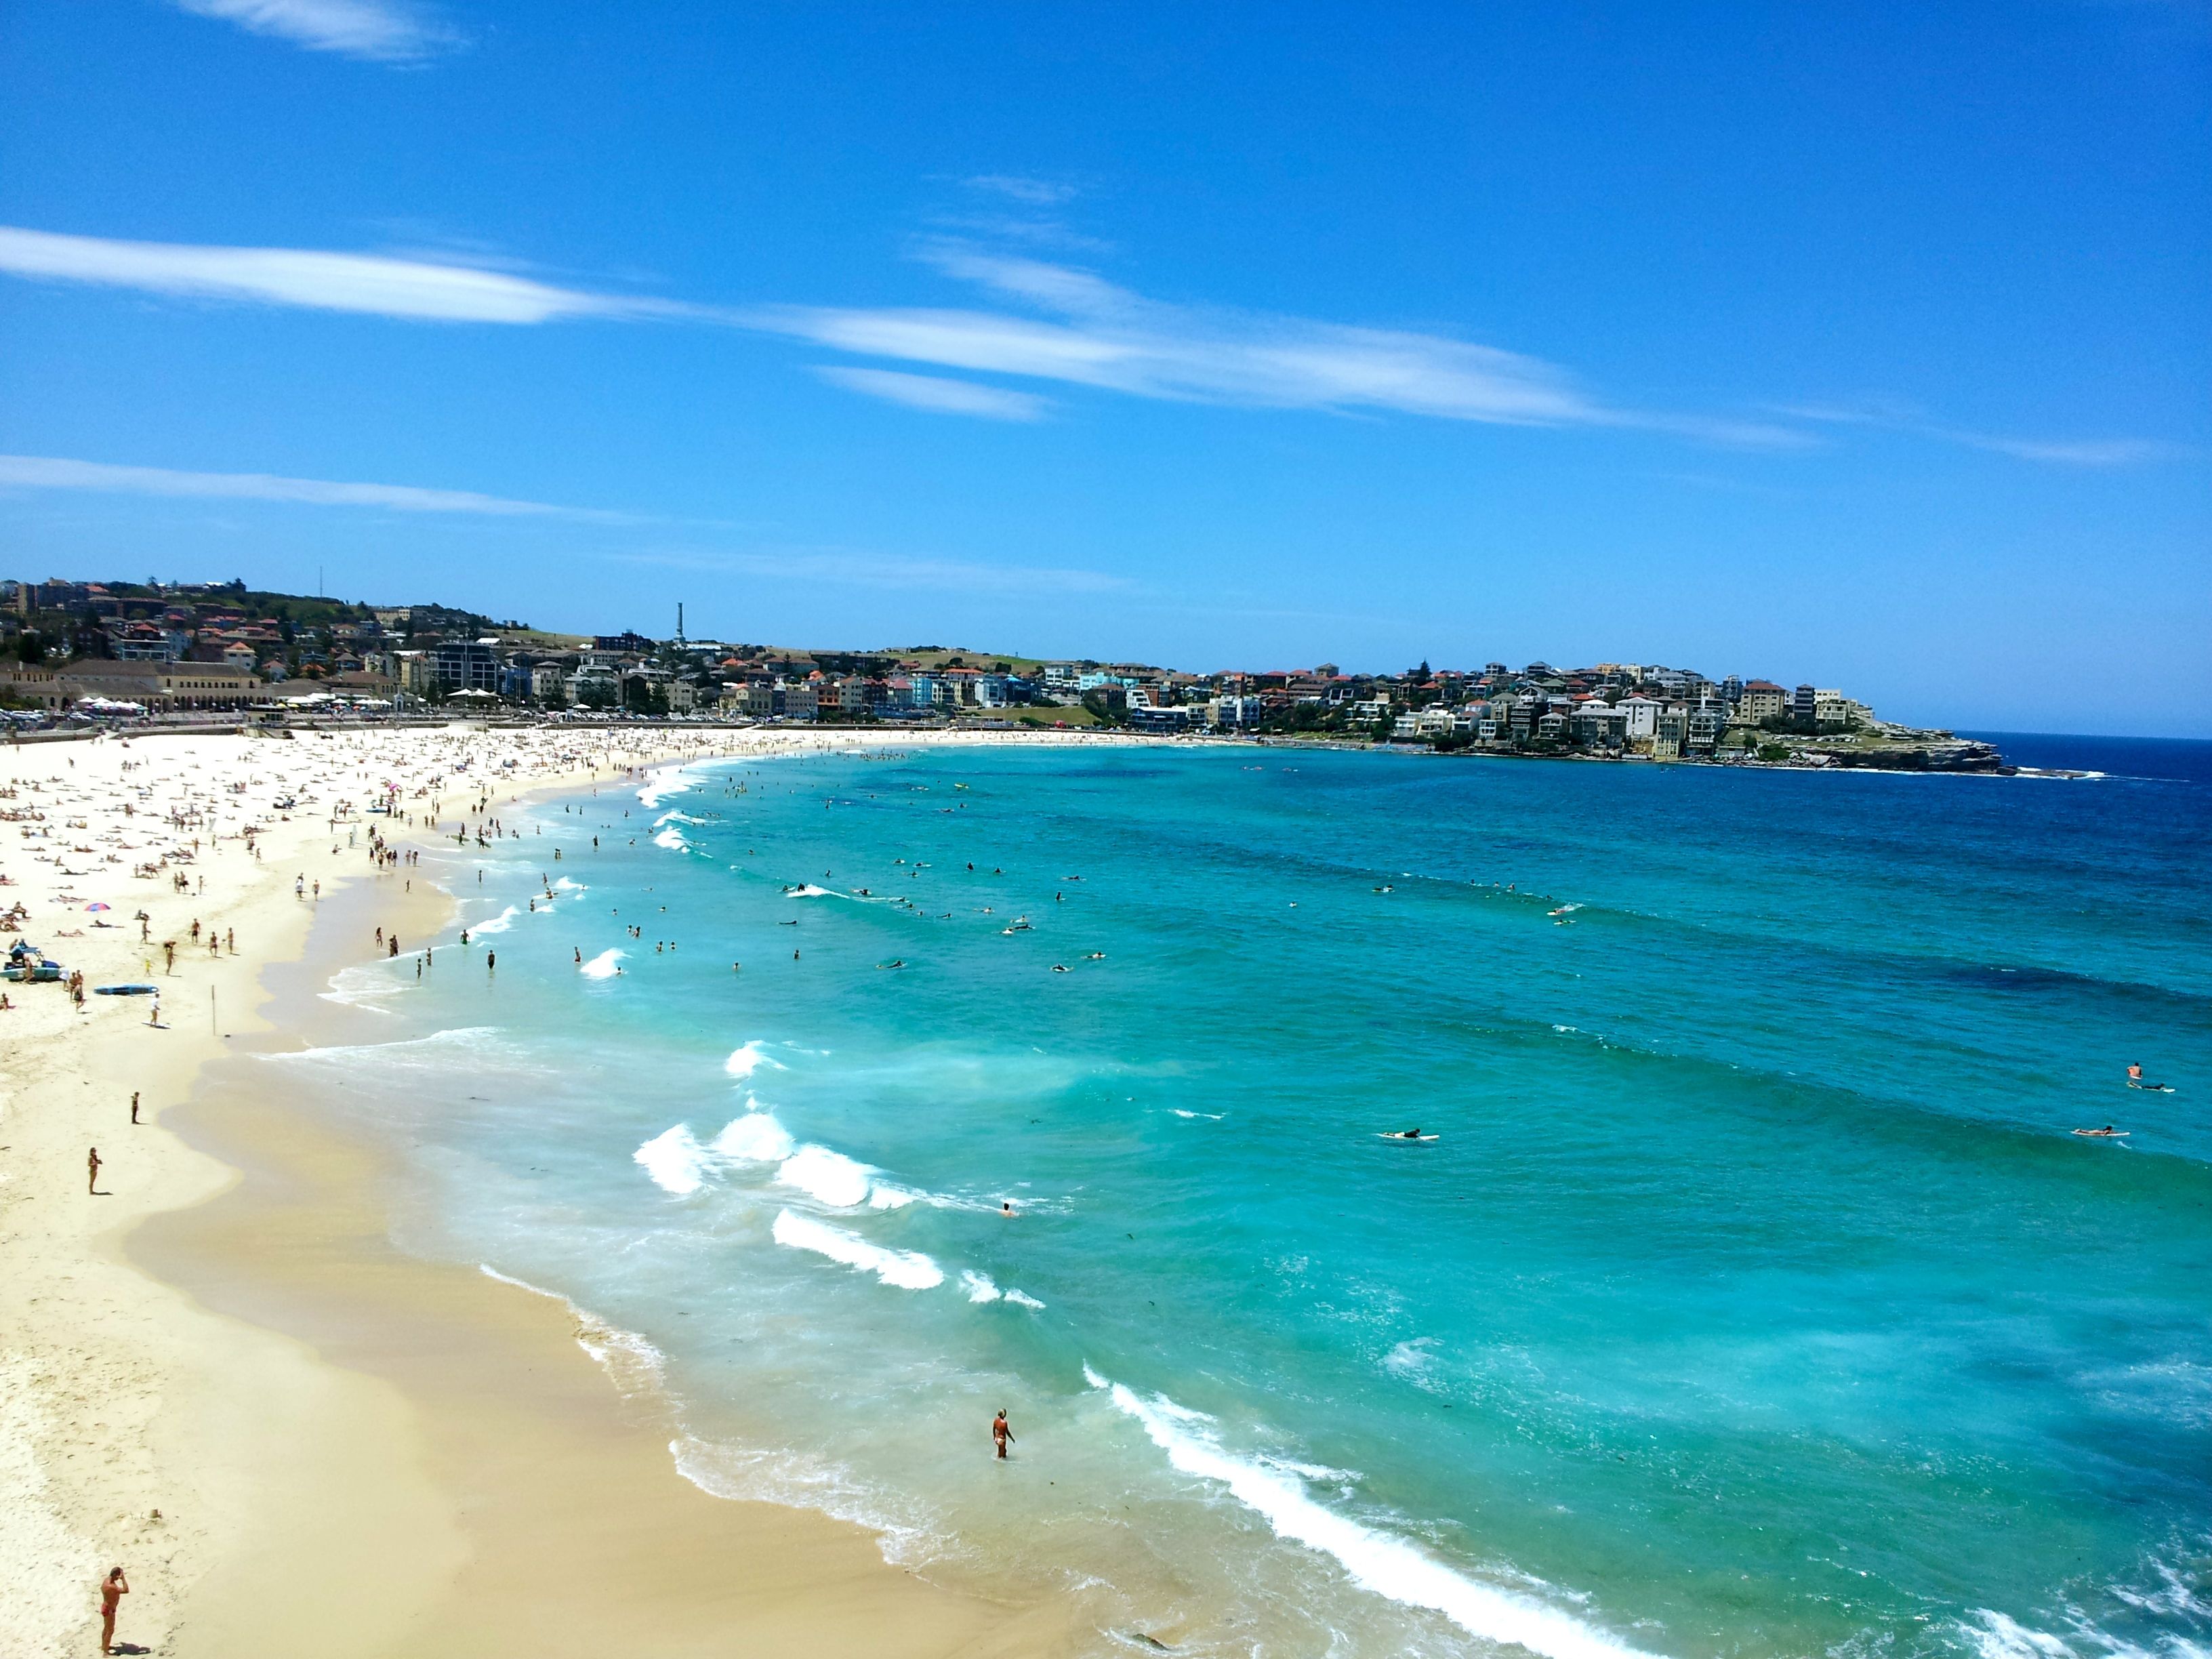 Best Beaches In Australia Map